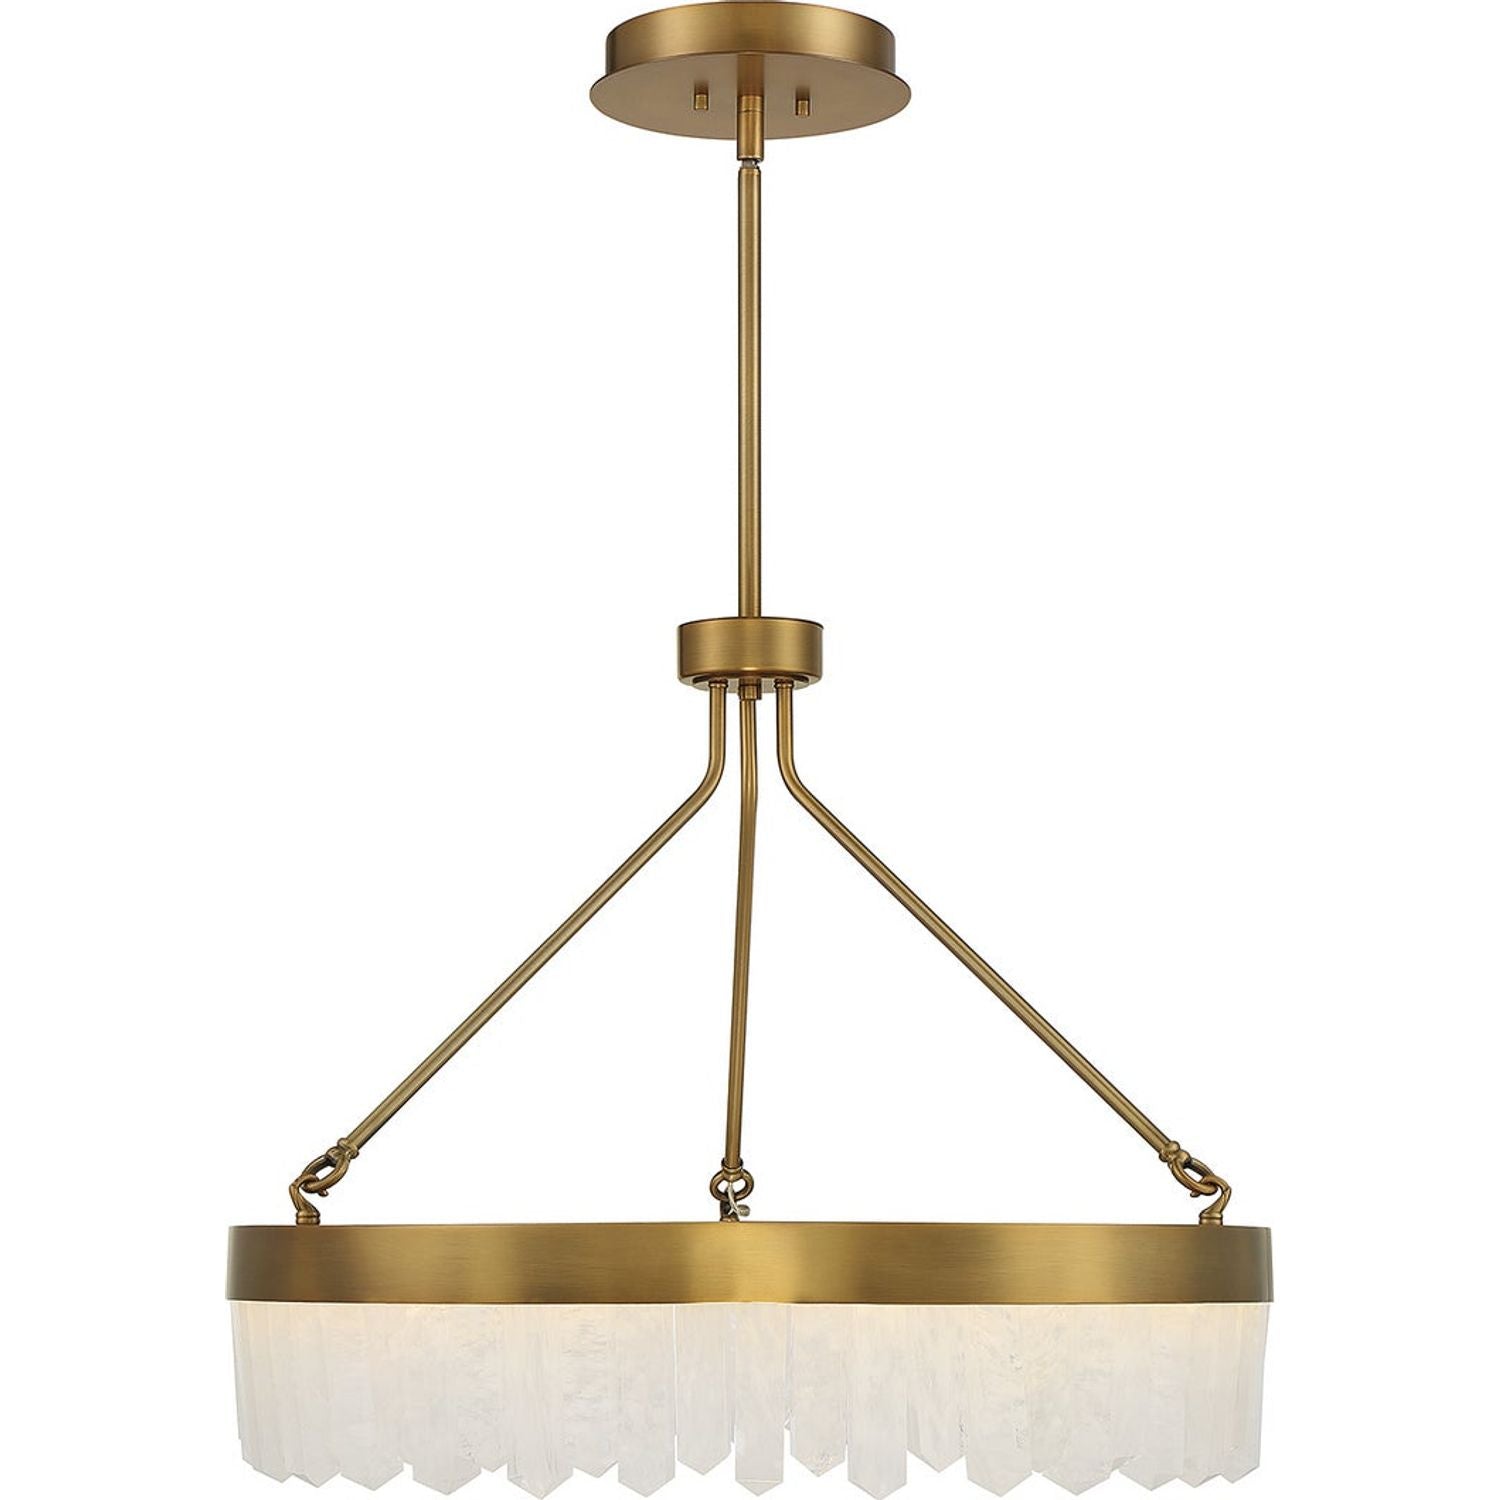 Savoy House - 7-1620-43-322 - LED Pendant - Landon - Warm Brass